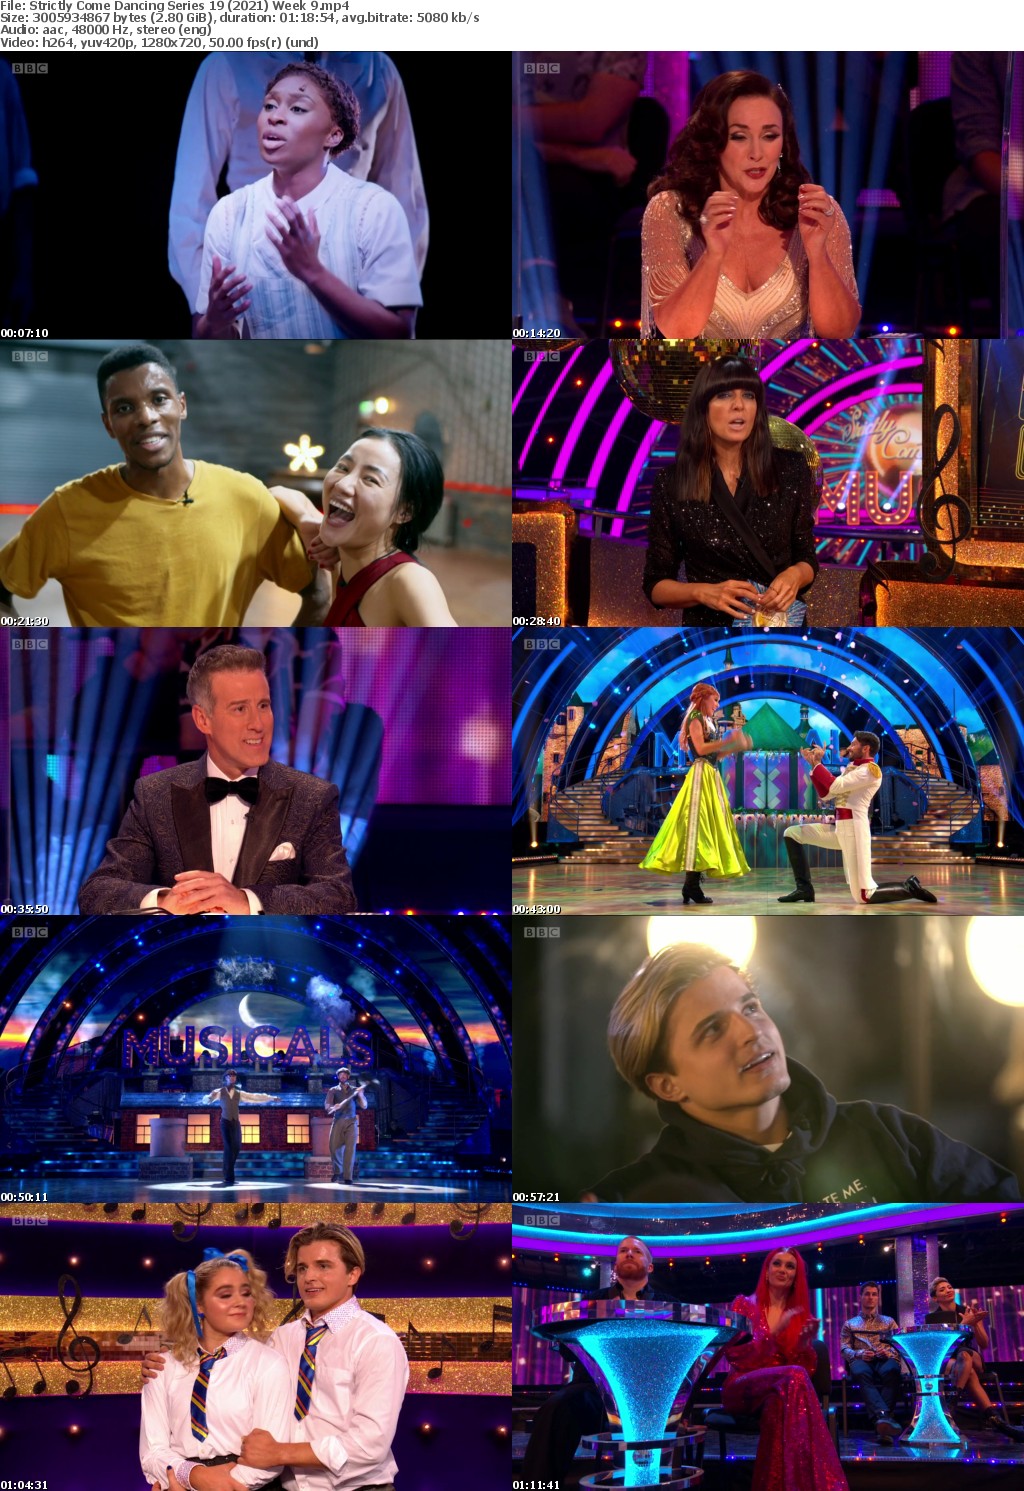 Strictly Come Dancing Series 19 (2021) Week 9